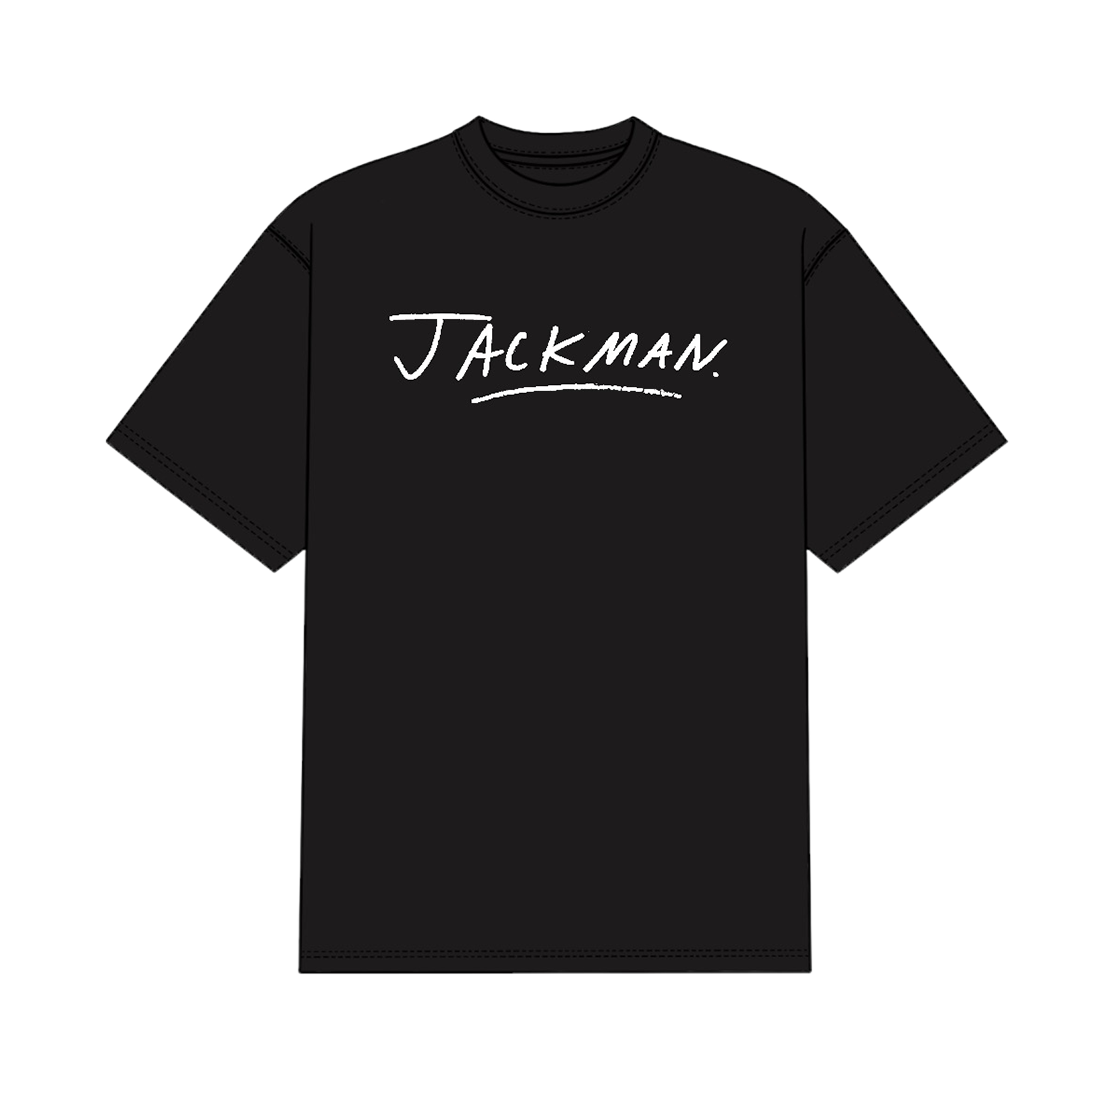 Jackman. Tracklist Tee